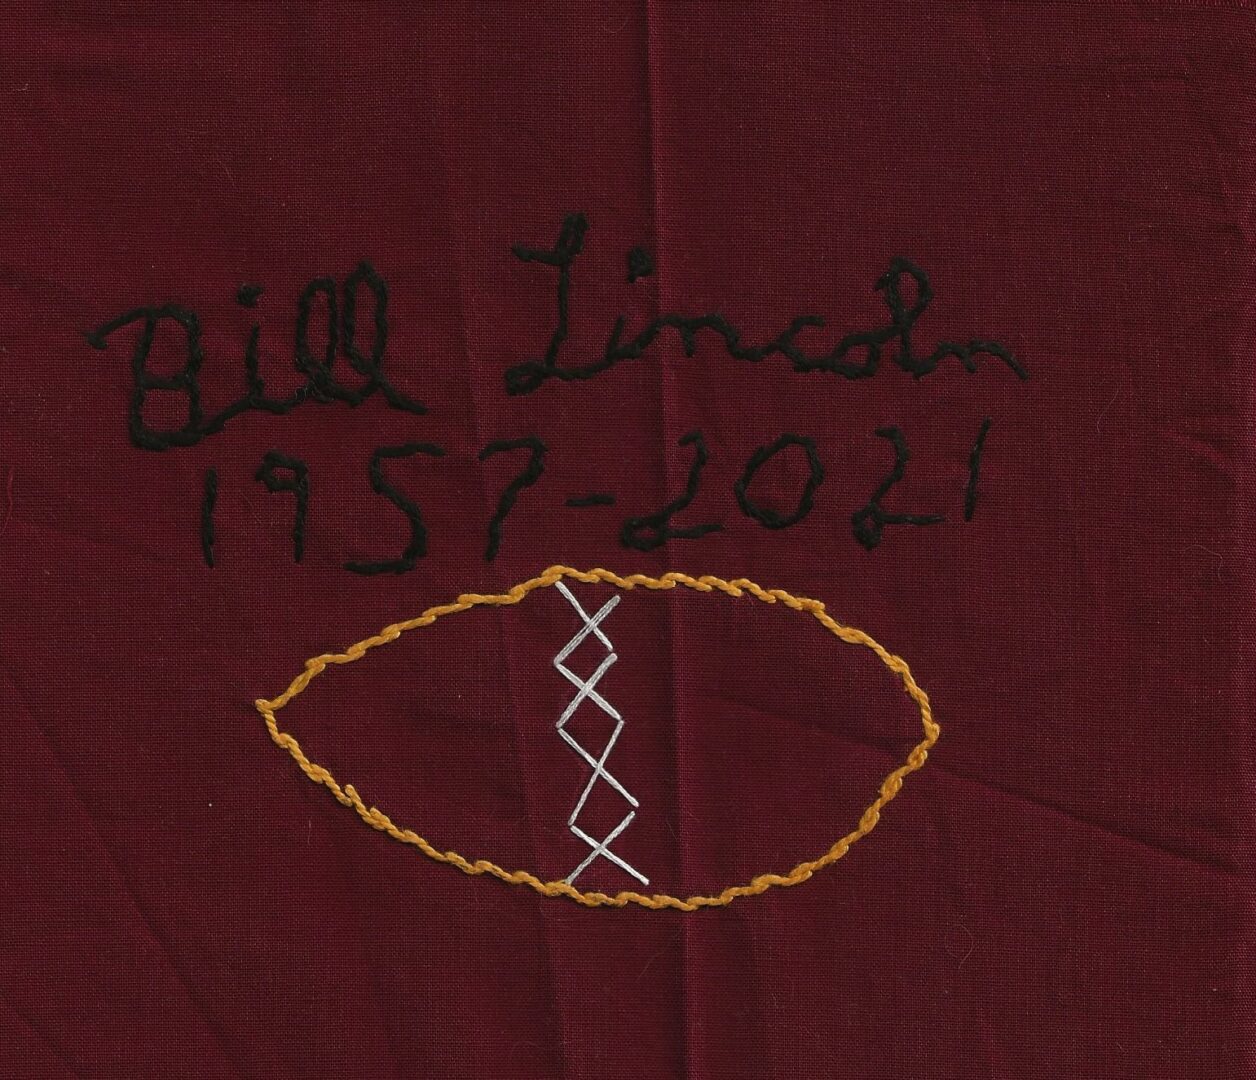 IN MEMORY OF BILL LINCOLN - 1957 - 2021